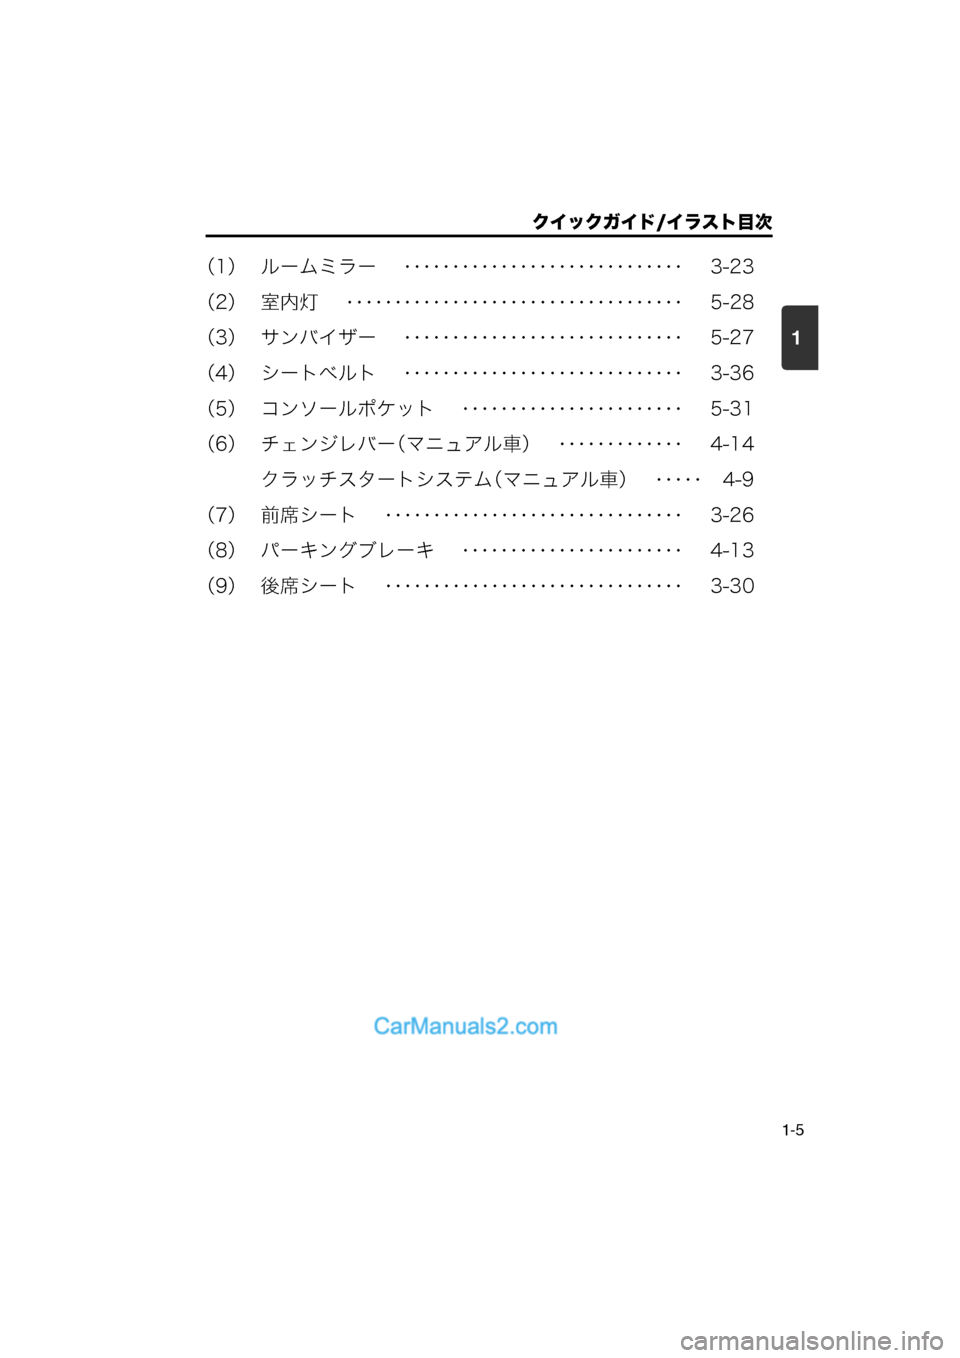 MAZDA MODEL CARROL 2013  取扱説明書 (キャロル) (in Japanese) 1
クイックガイド/イラスト目次
1-5
（1） ルームミラー　 ･････････････････････････････ 　3-23
（2） 室内灯　 ･･